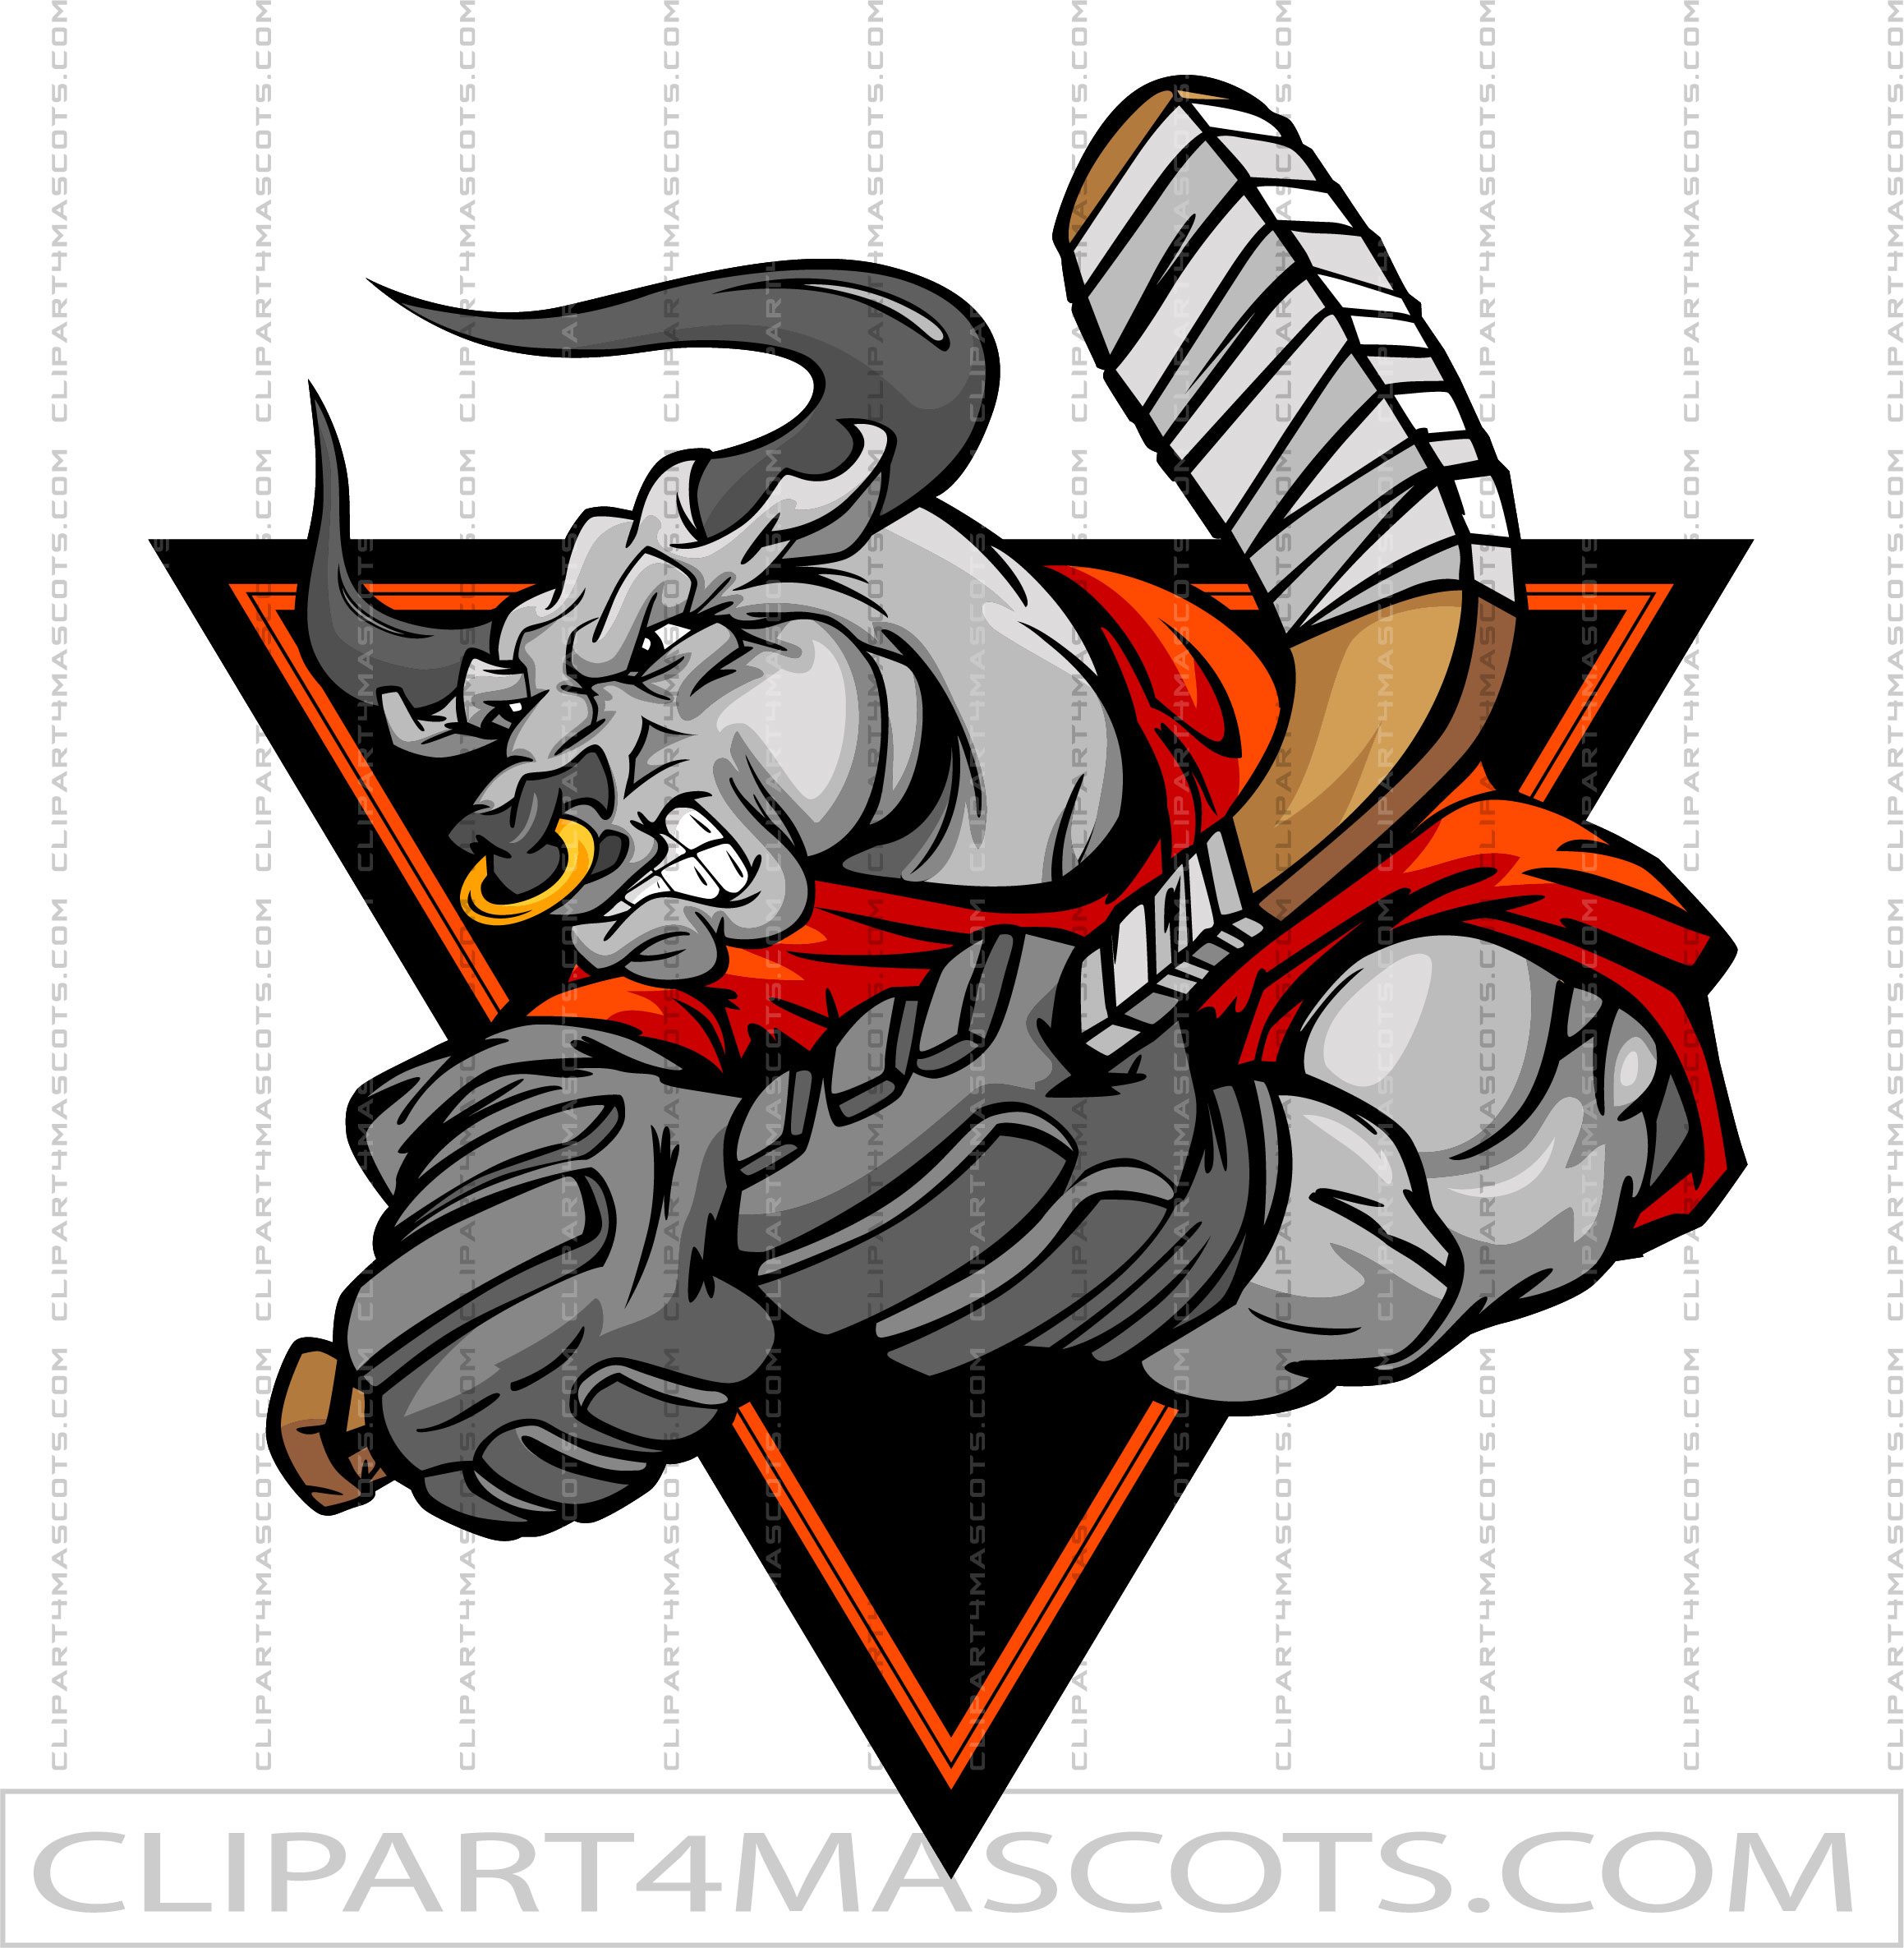 Bull Hockey Player